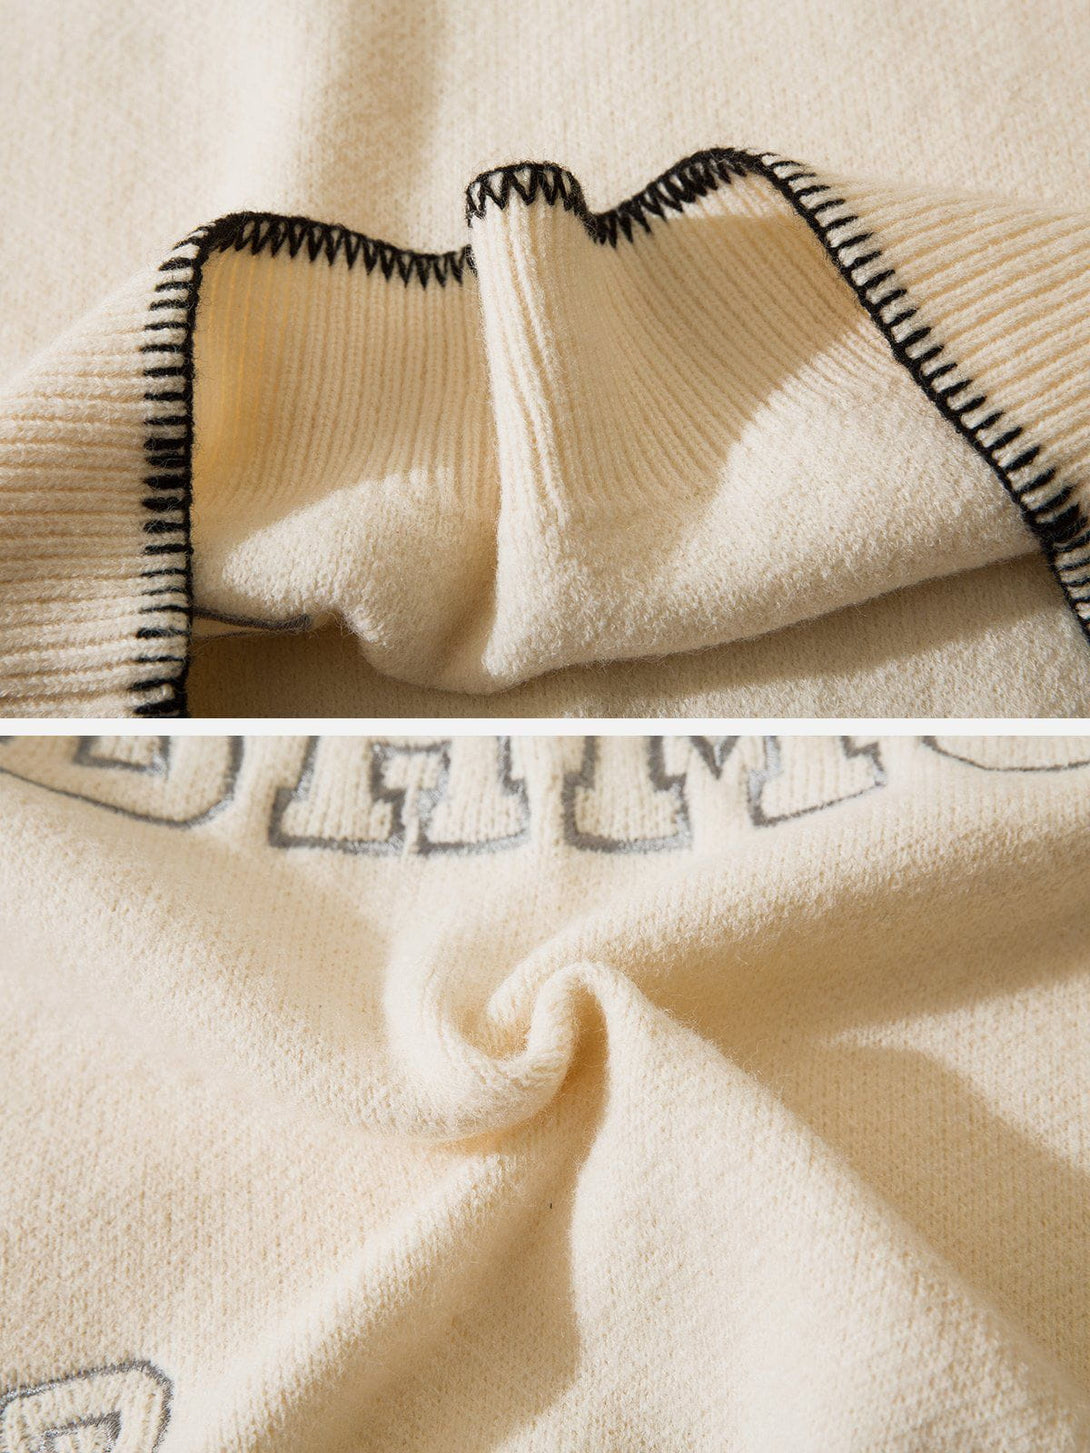 AlanBalen® - Simple Embroidered Letters Sweater Vest AlanBalen